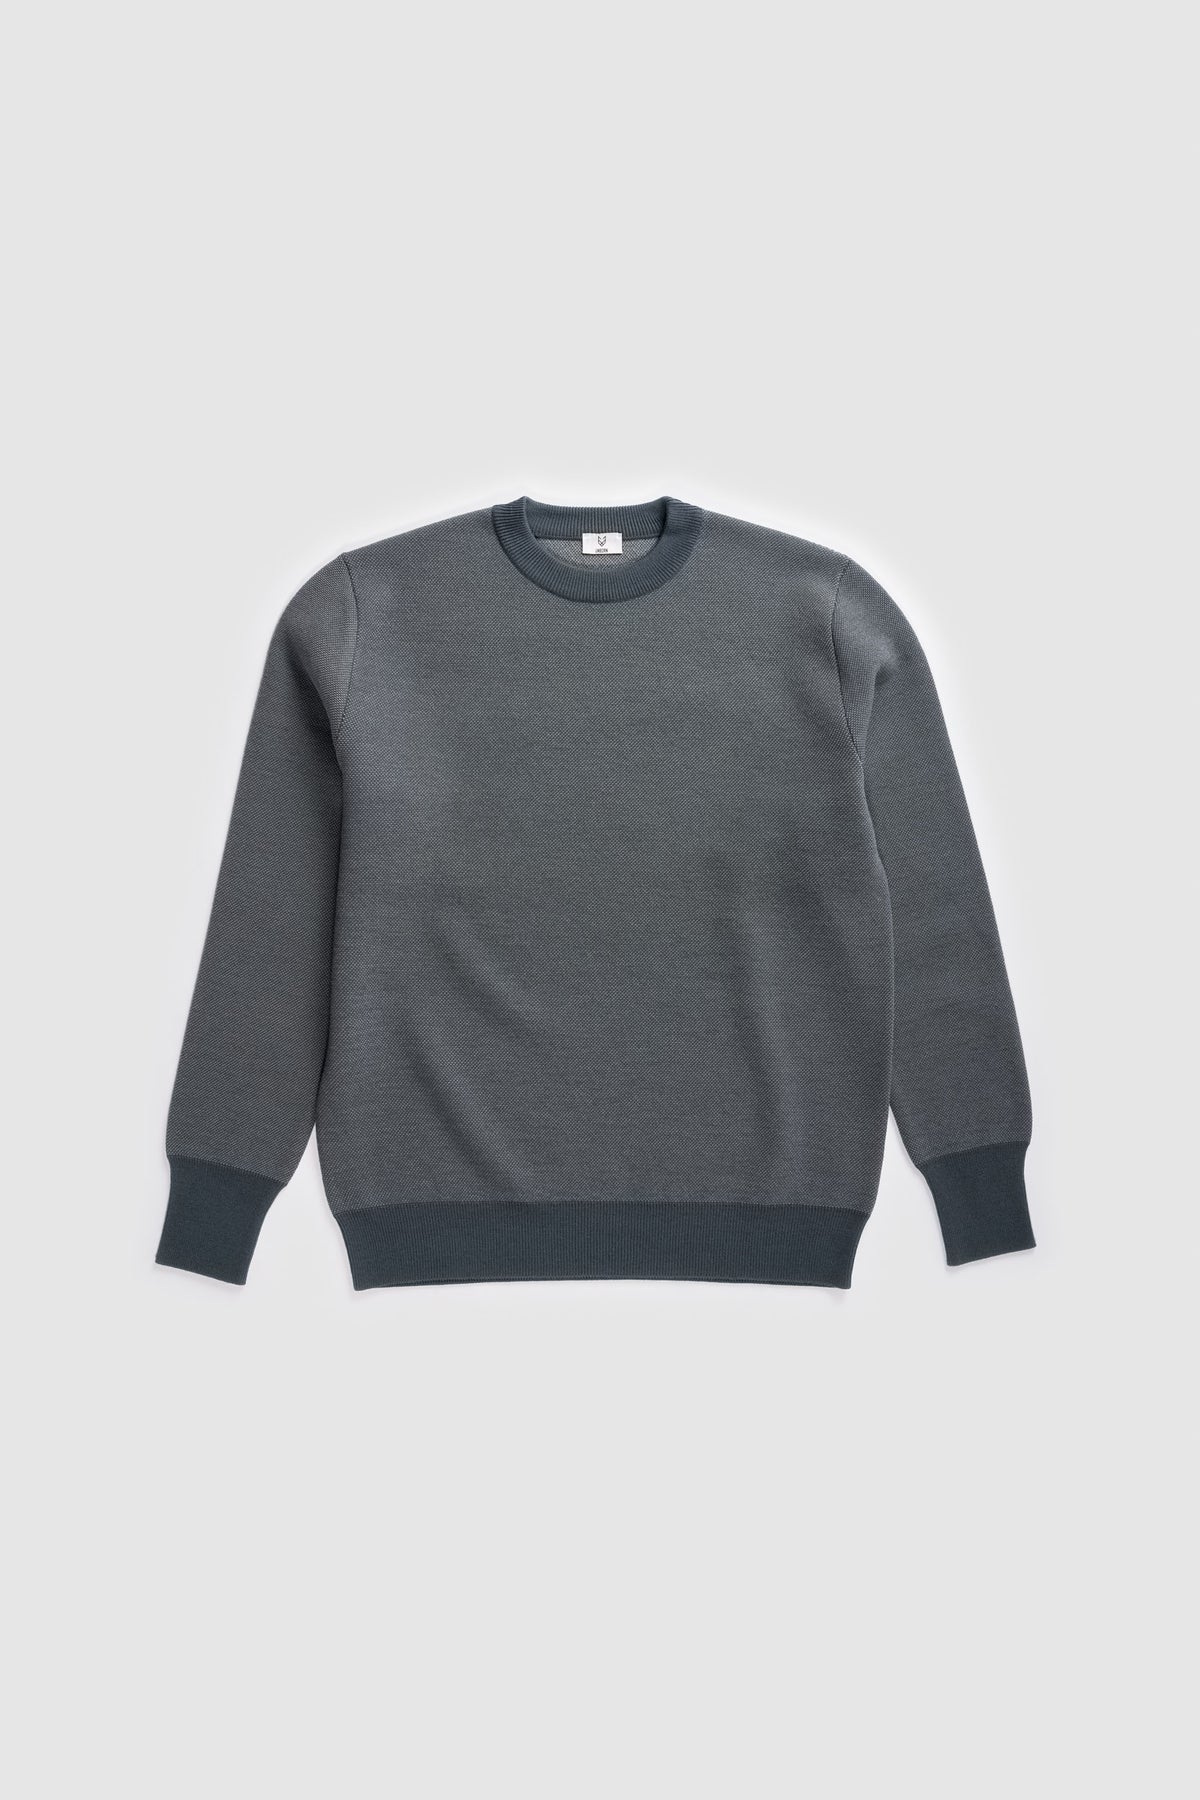 The Merino wool jaquard sweater Navy Grey, flat front - Unborn